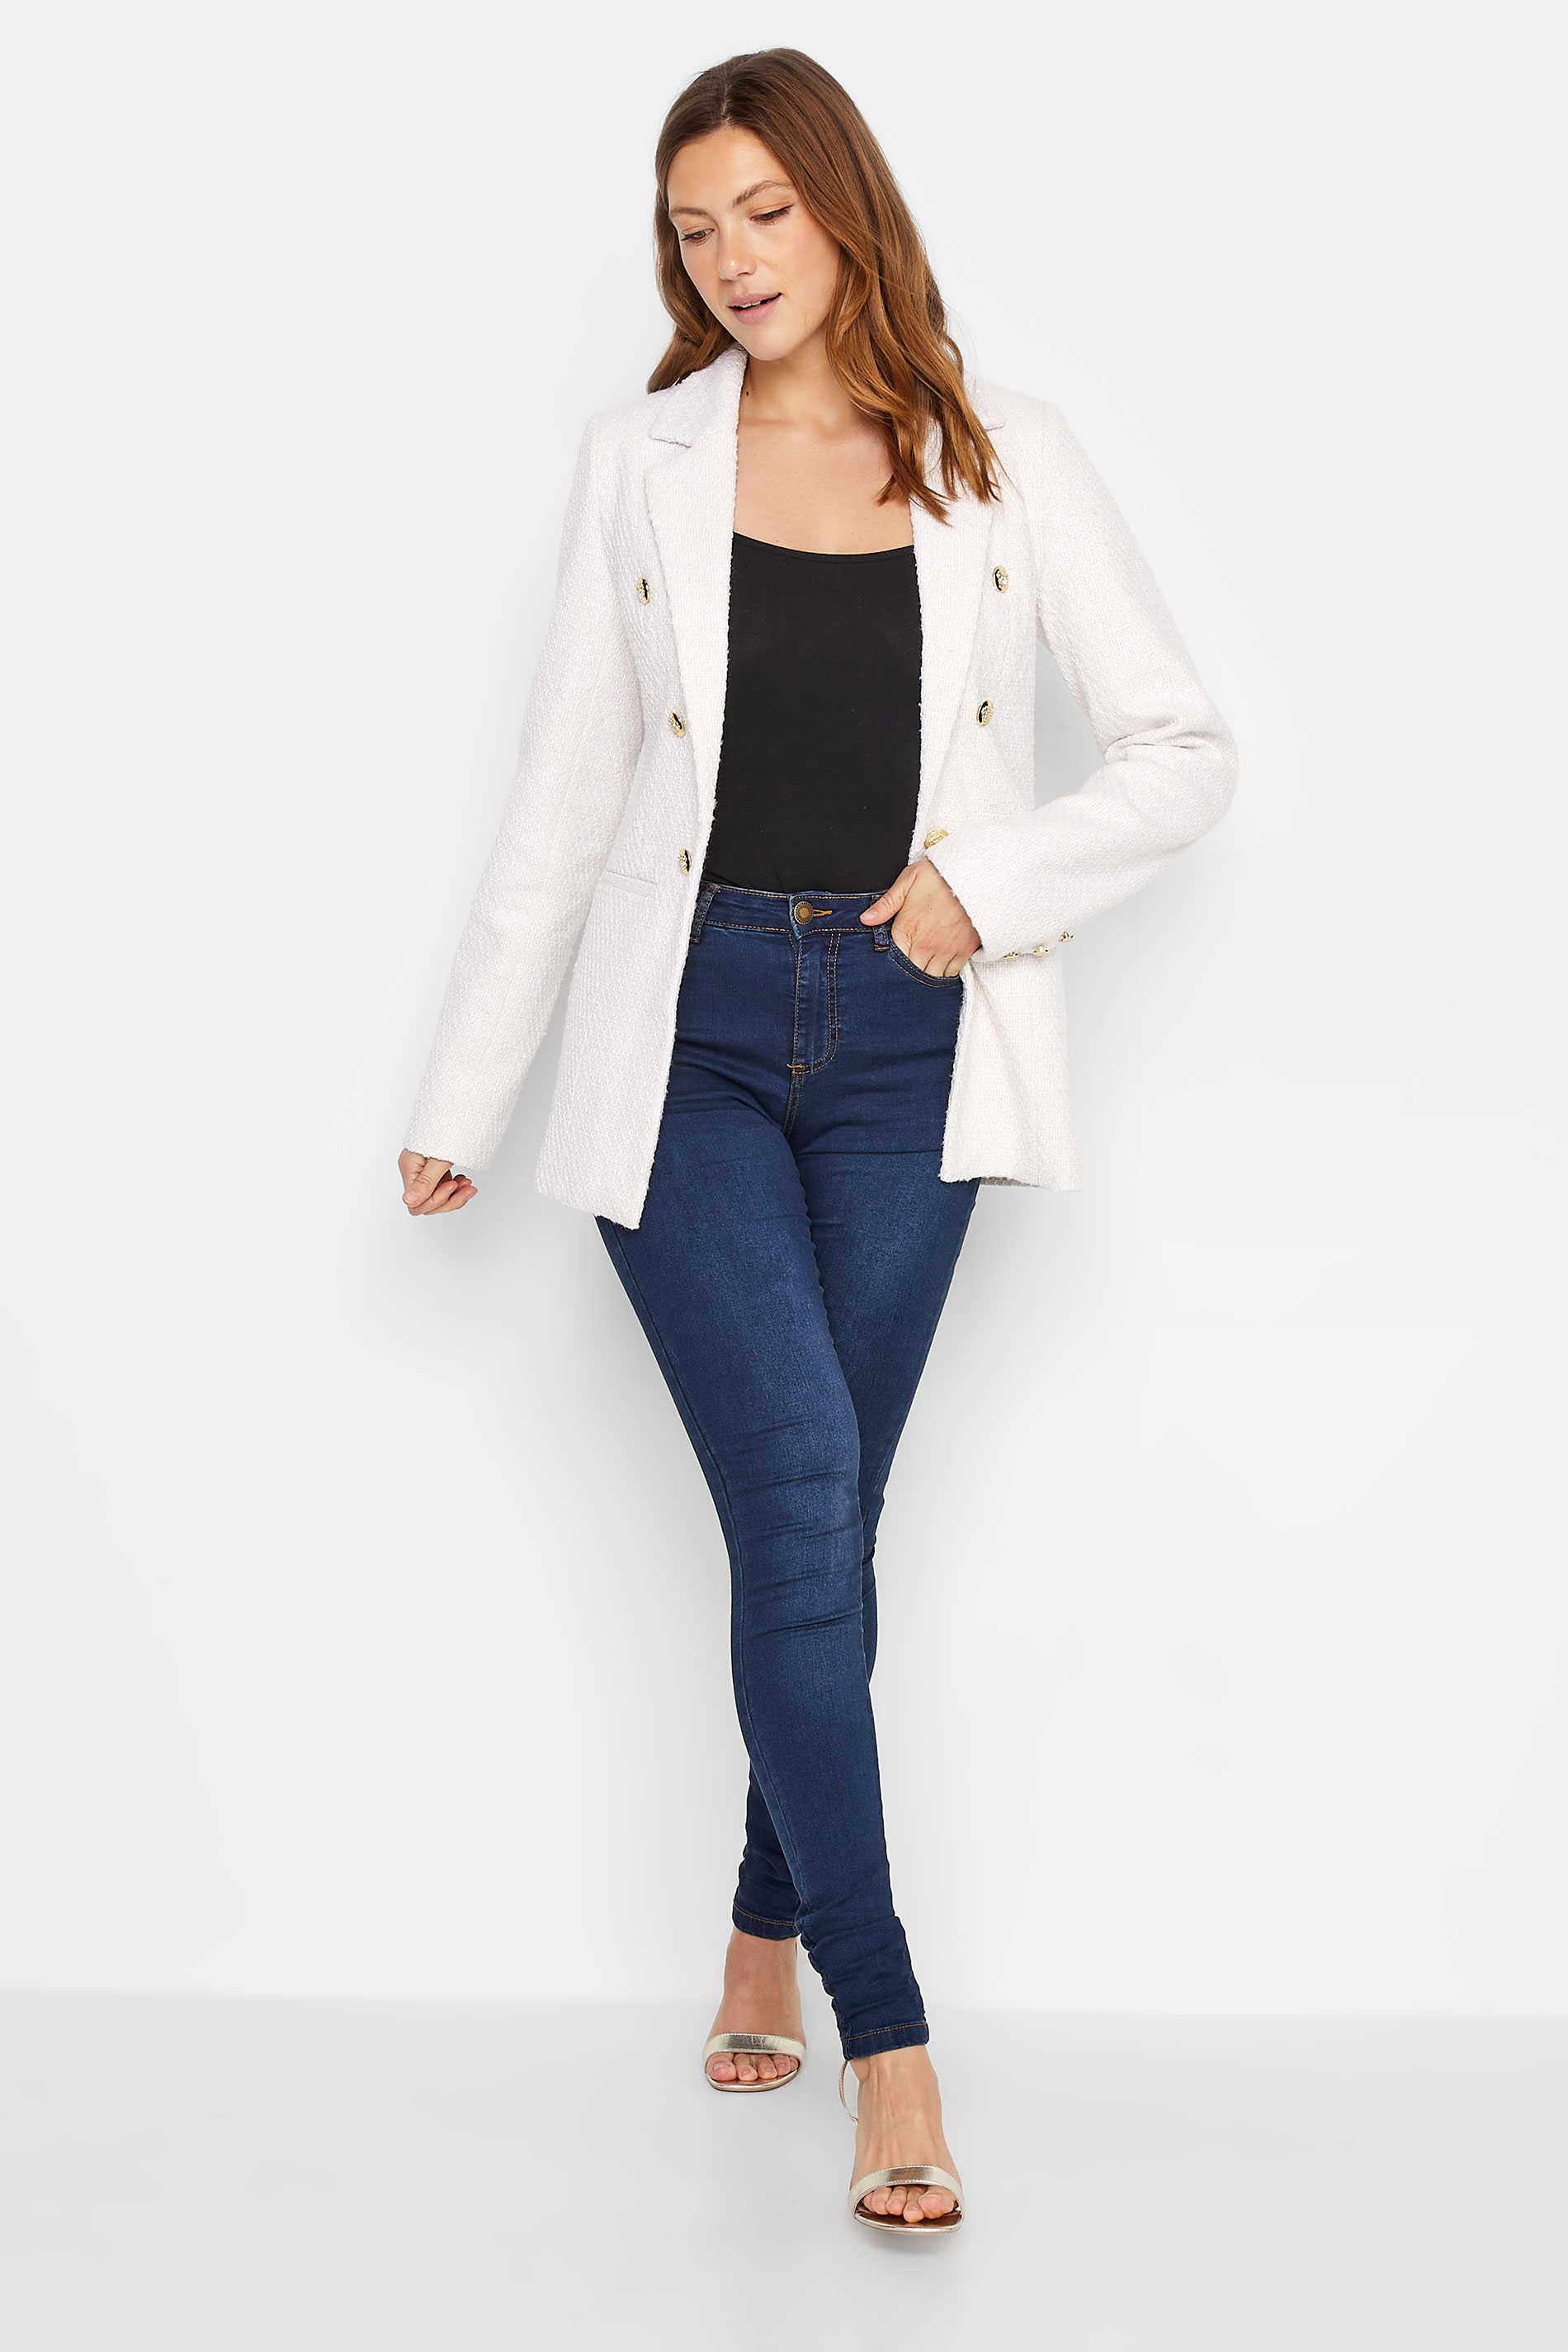 LTS Tall Women's White Boucle Blazer | Long Tall Sally 2